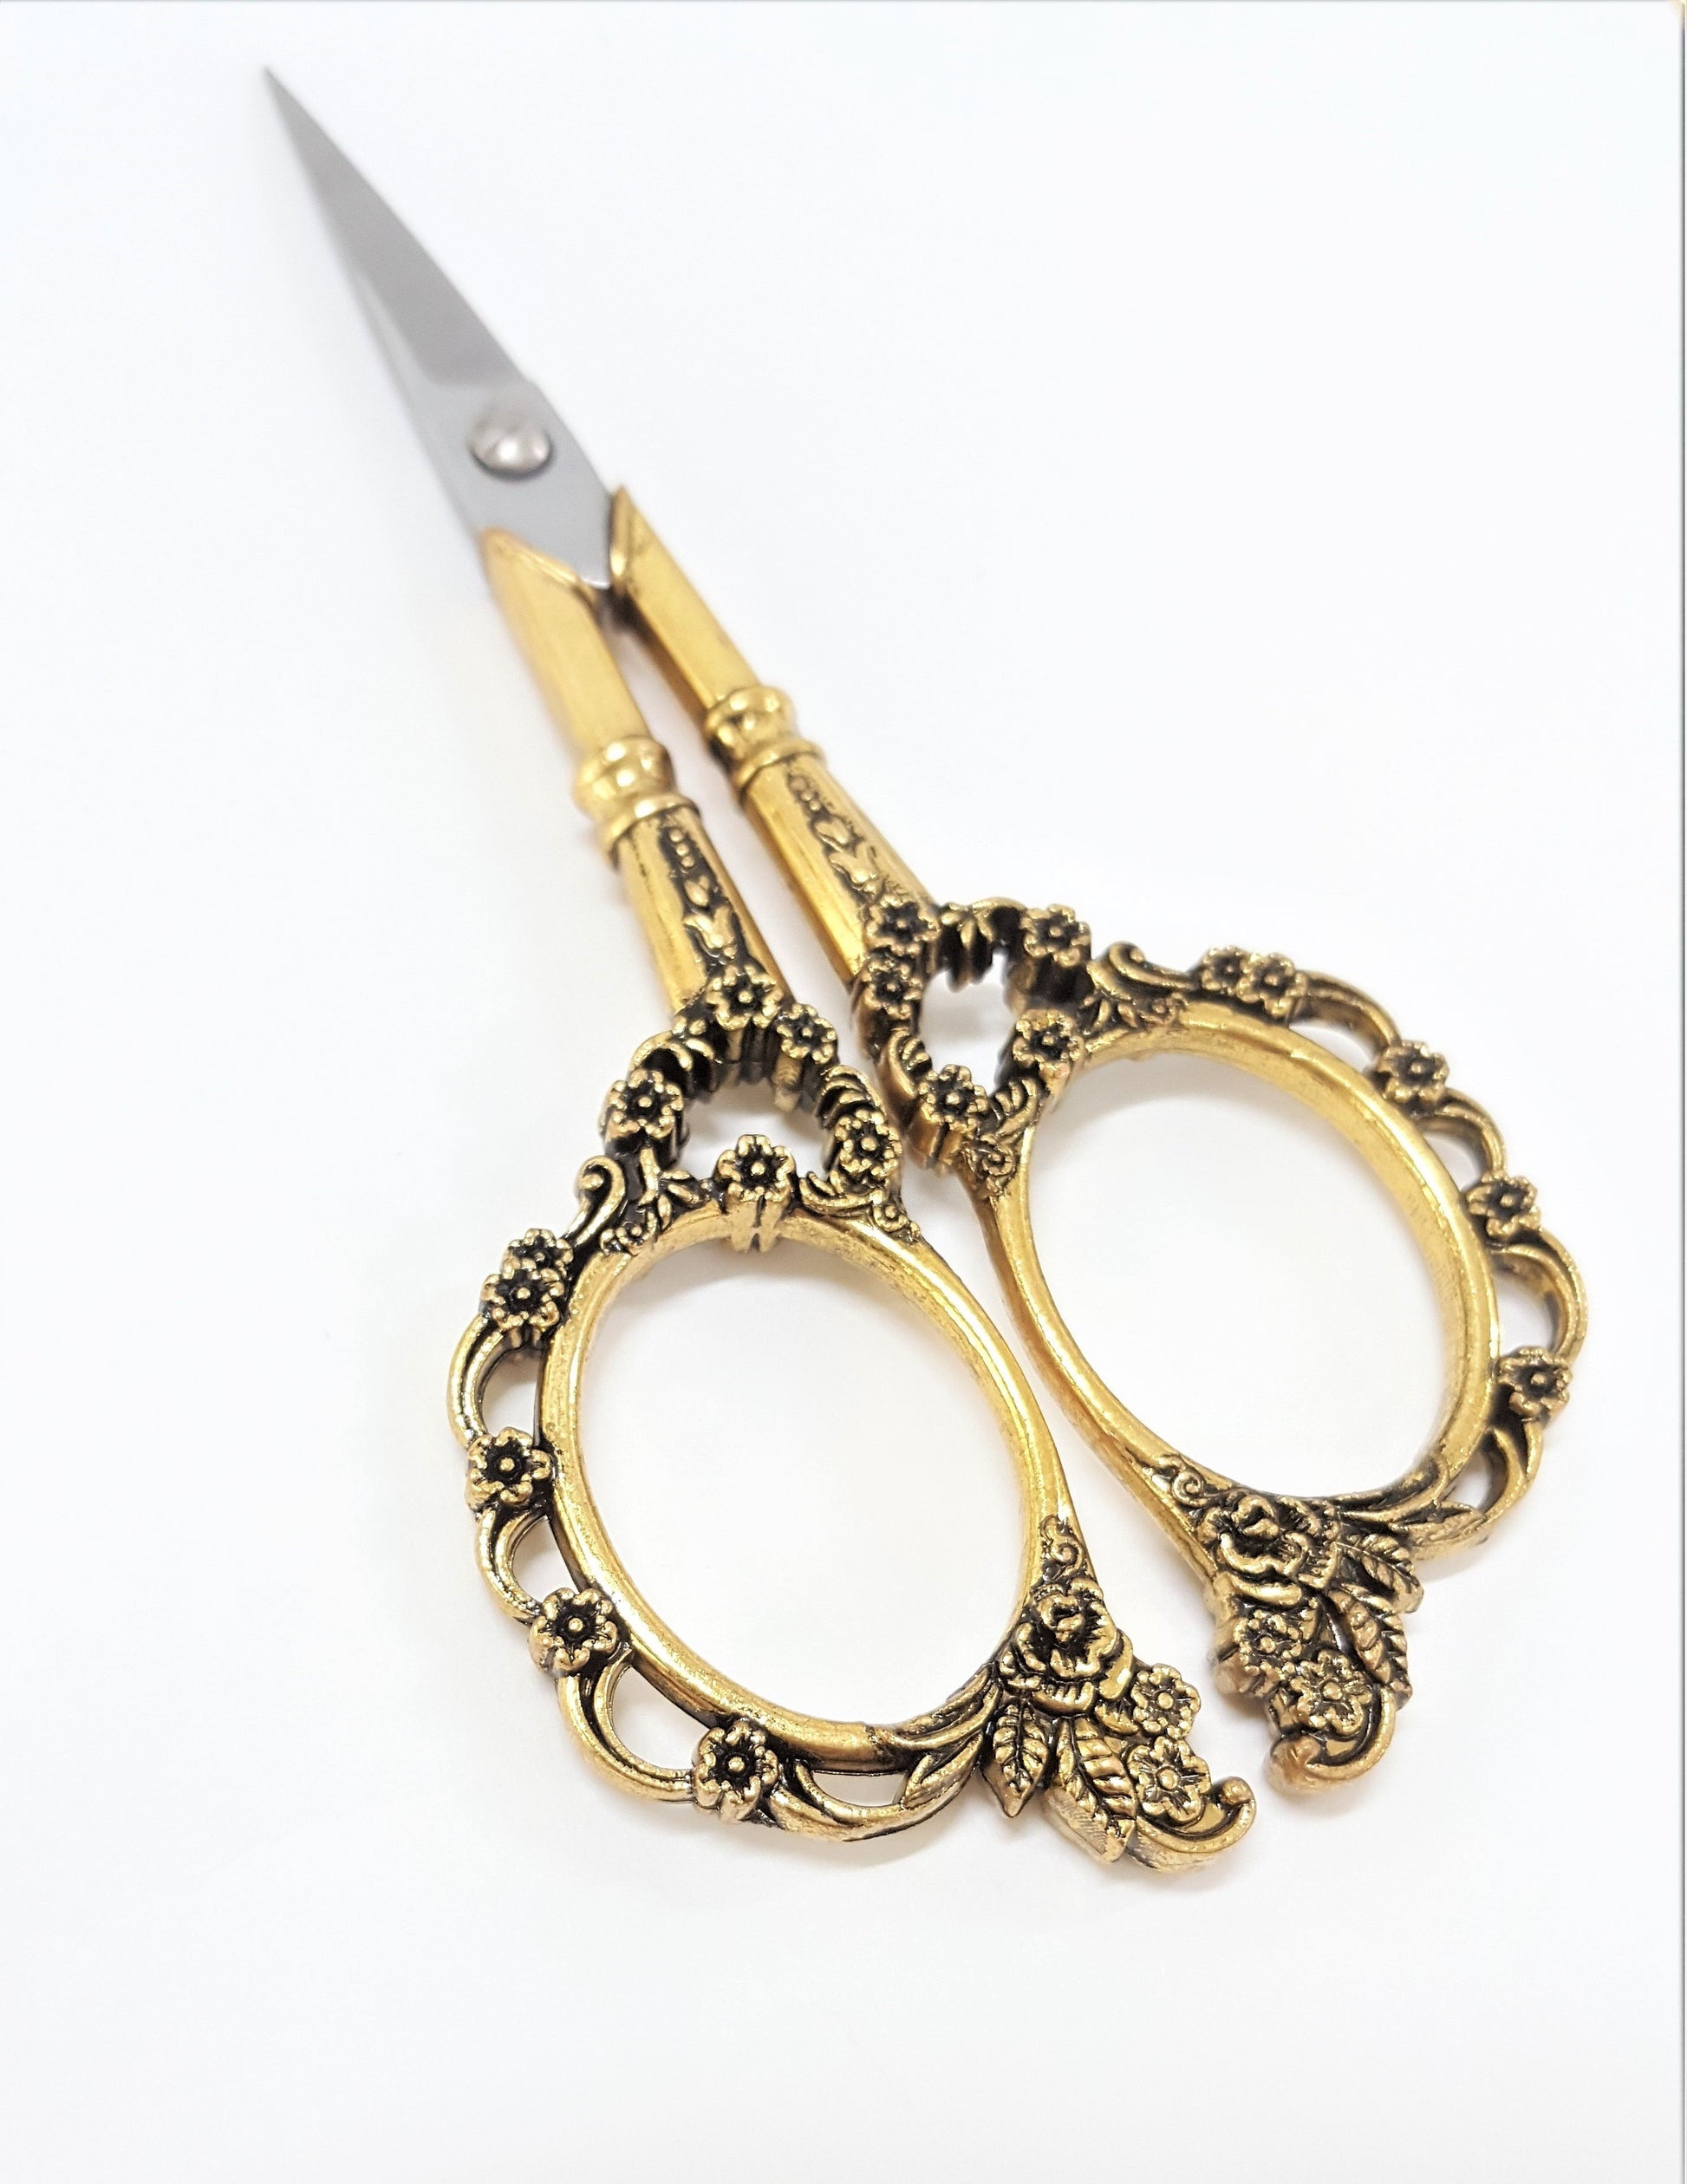 Vintage Craft Scissors (European Style) - Happiness Idea